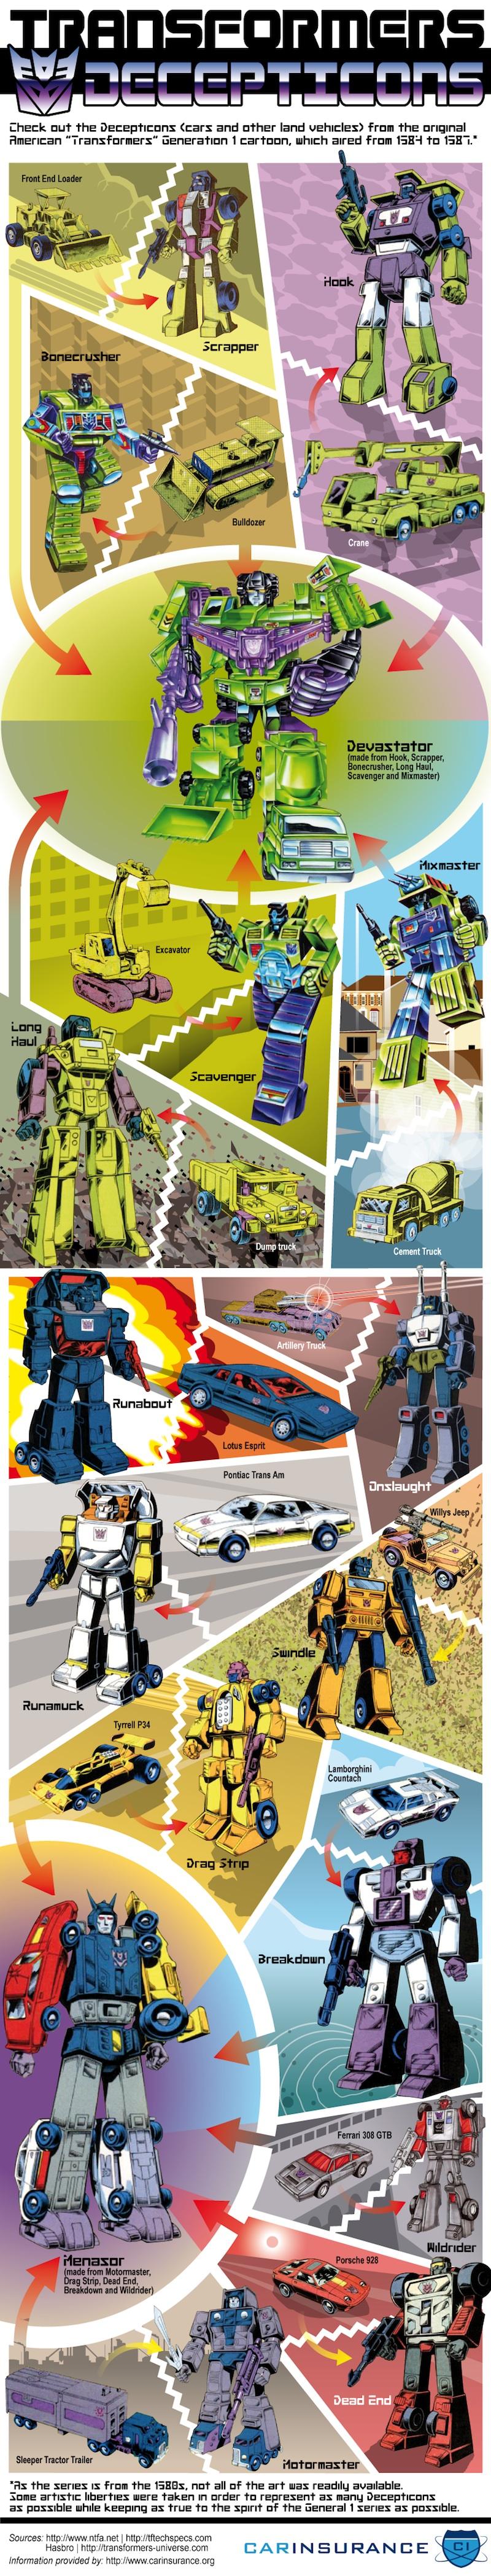 Transformers 3 clips et infographie